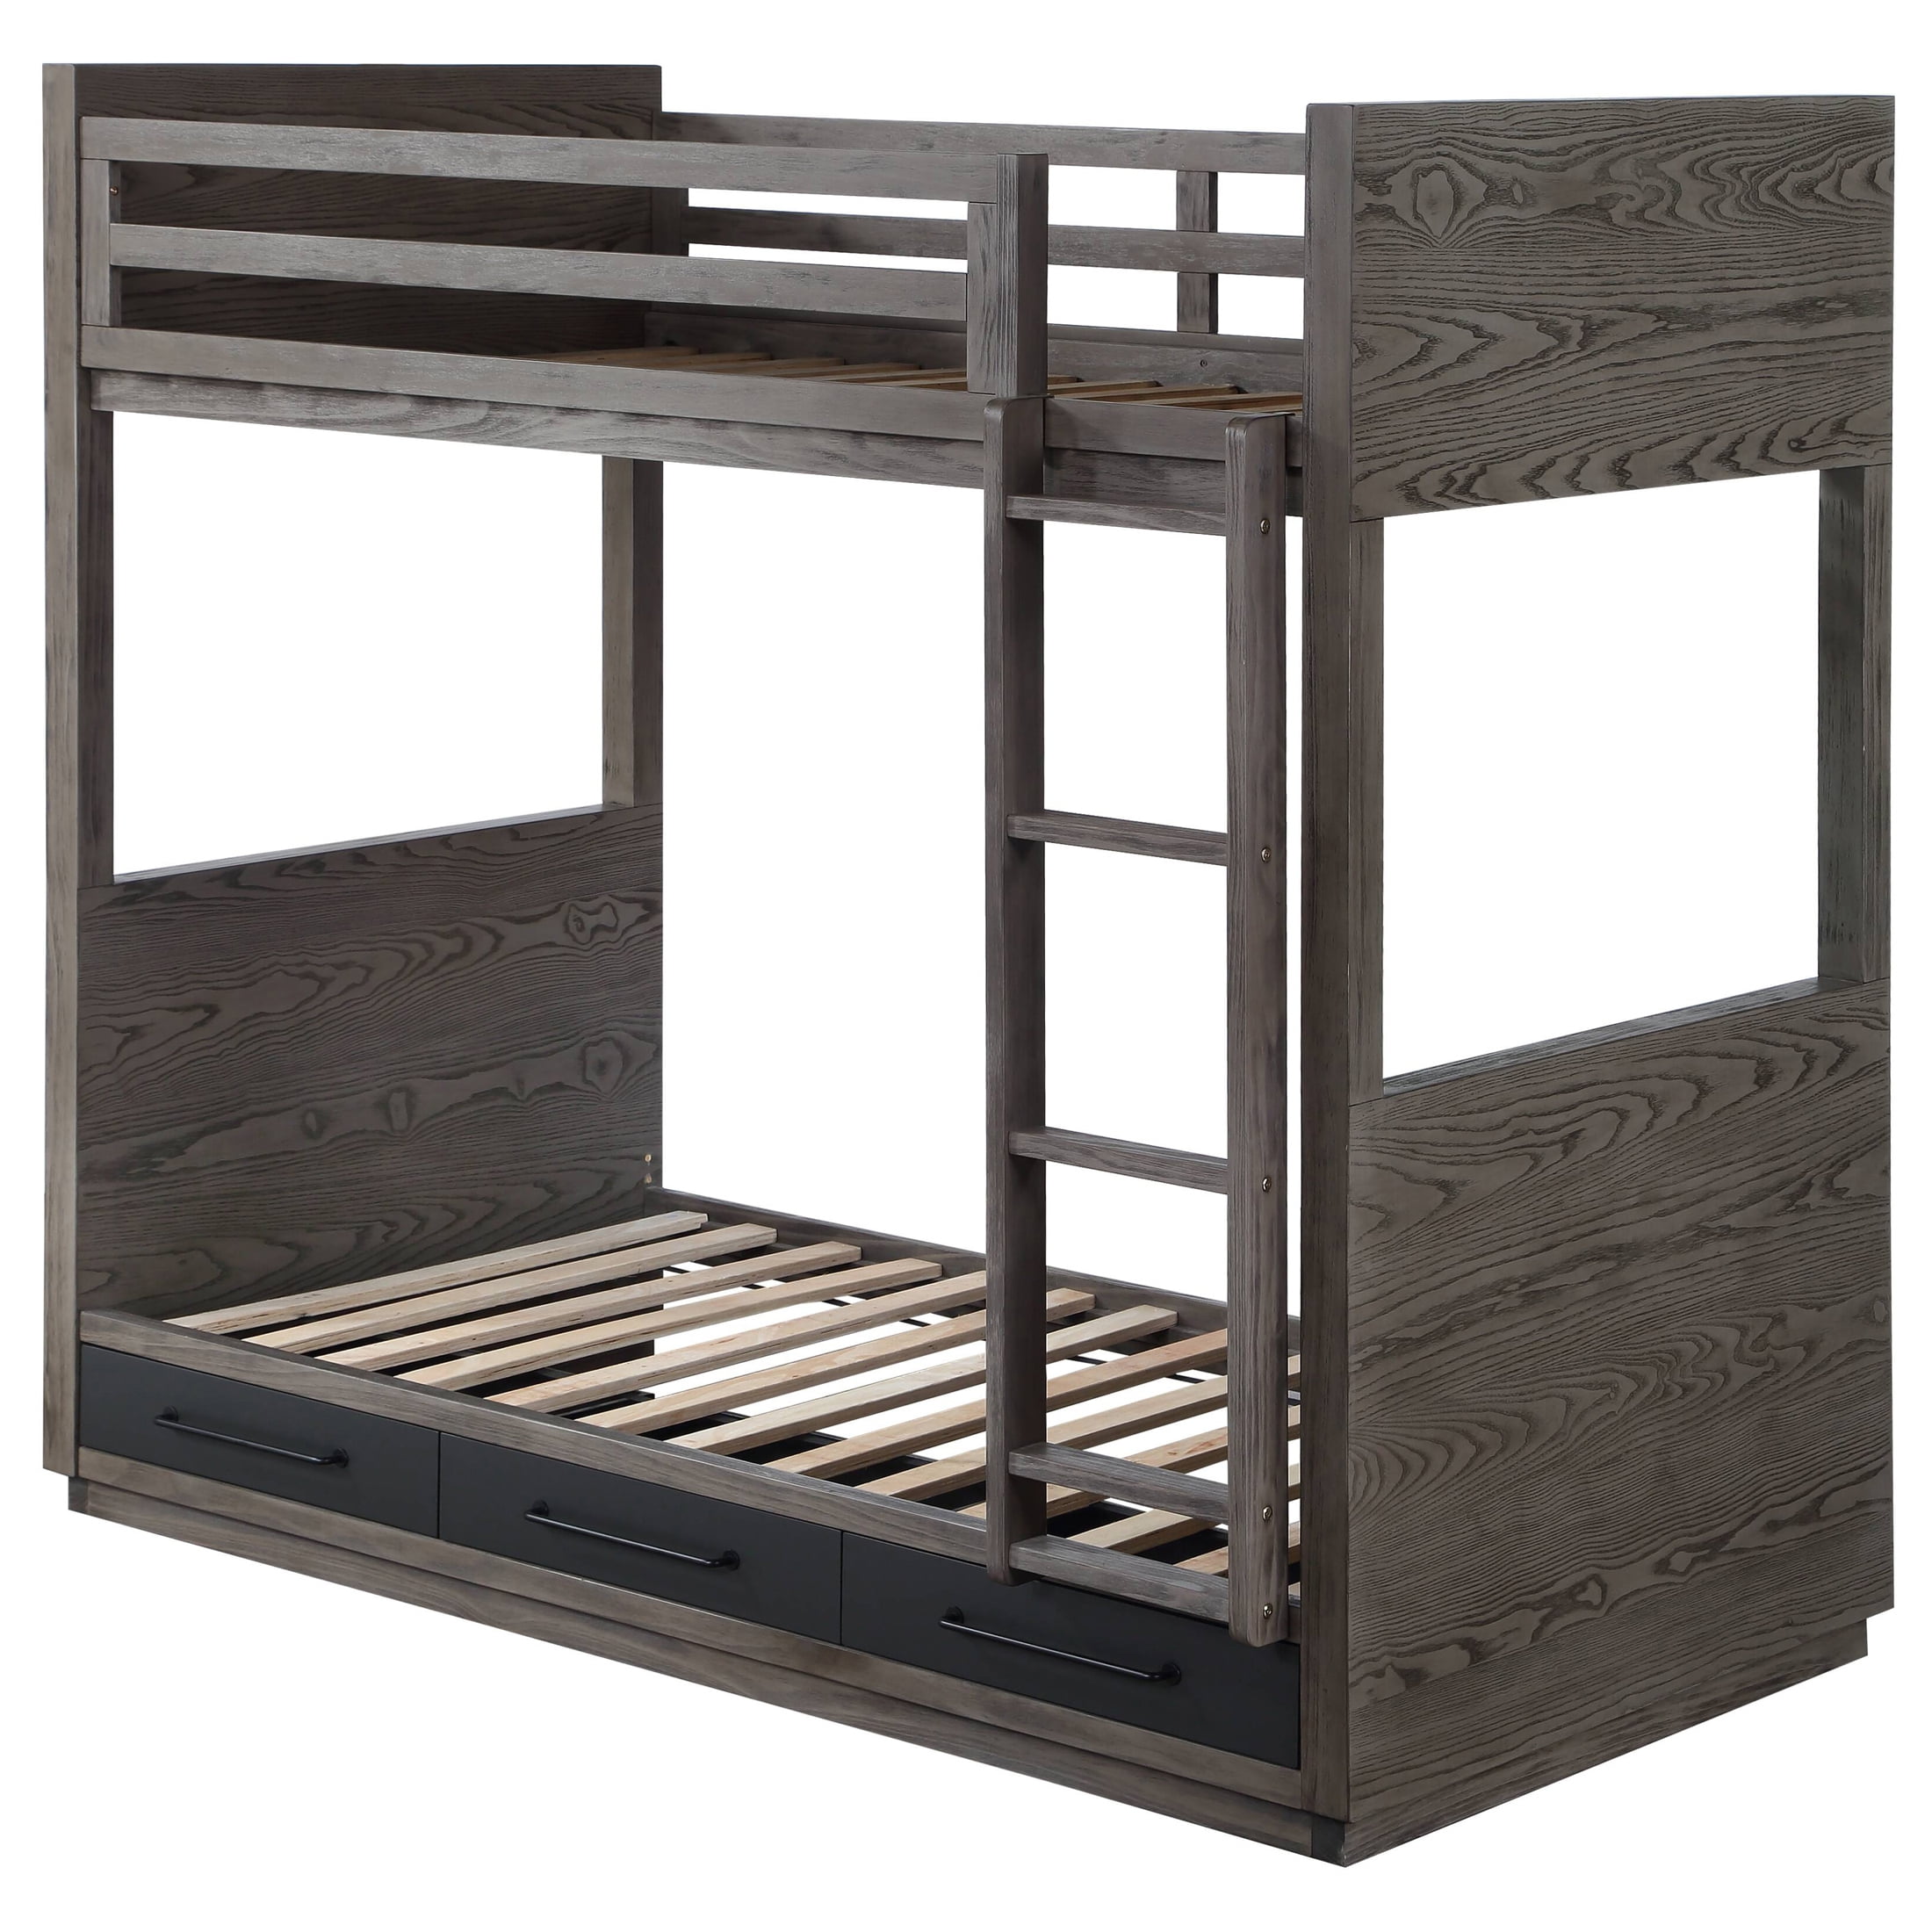 Picture of Acme Furniture BD00613 80 x 45.43 x 75 in. Estevon Bunk Bed, Gray Oak - Twin Size